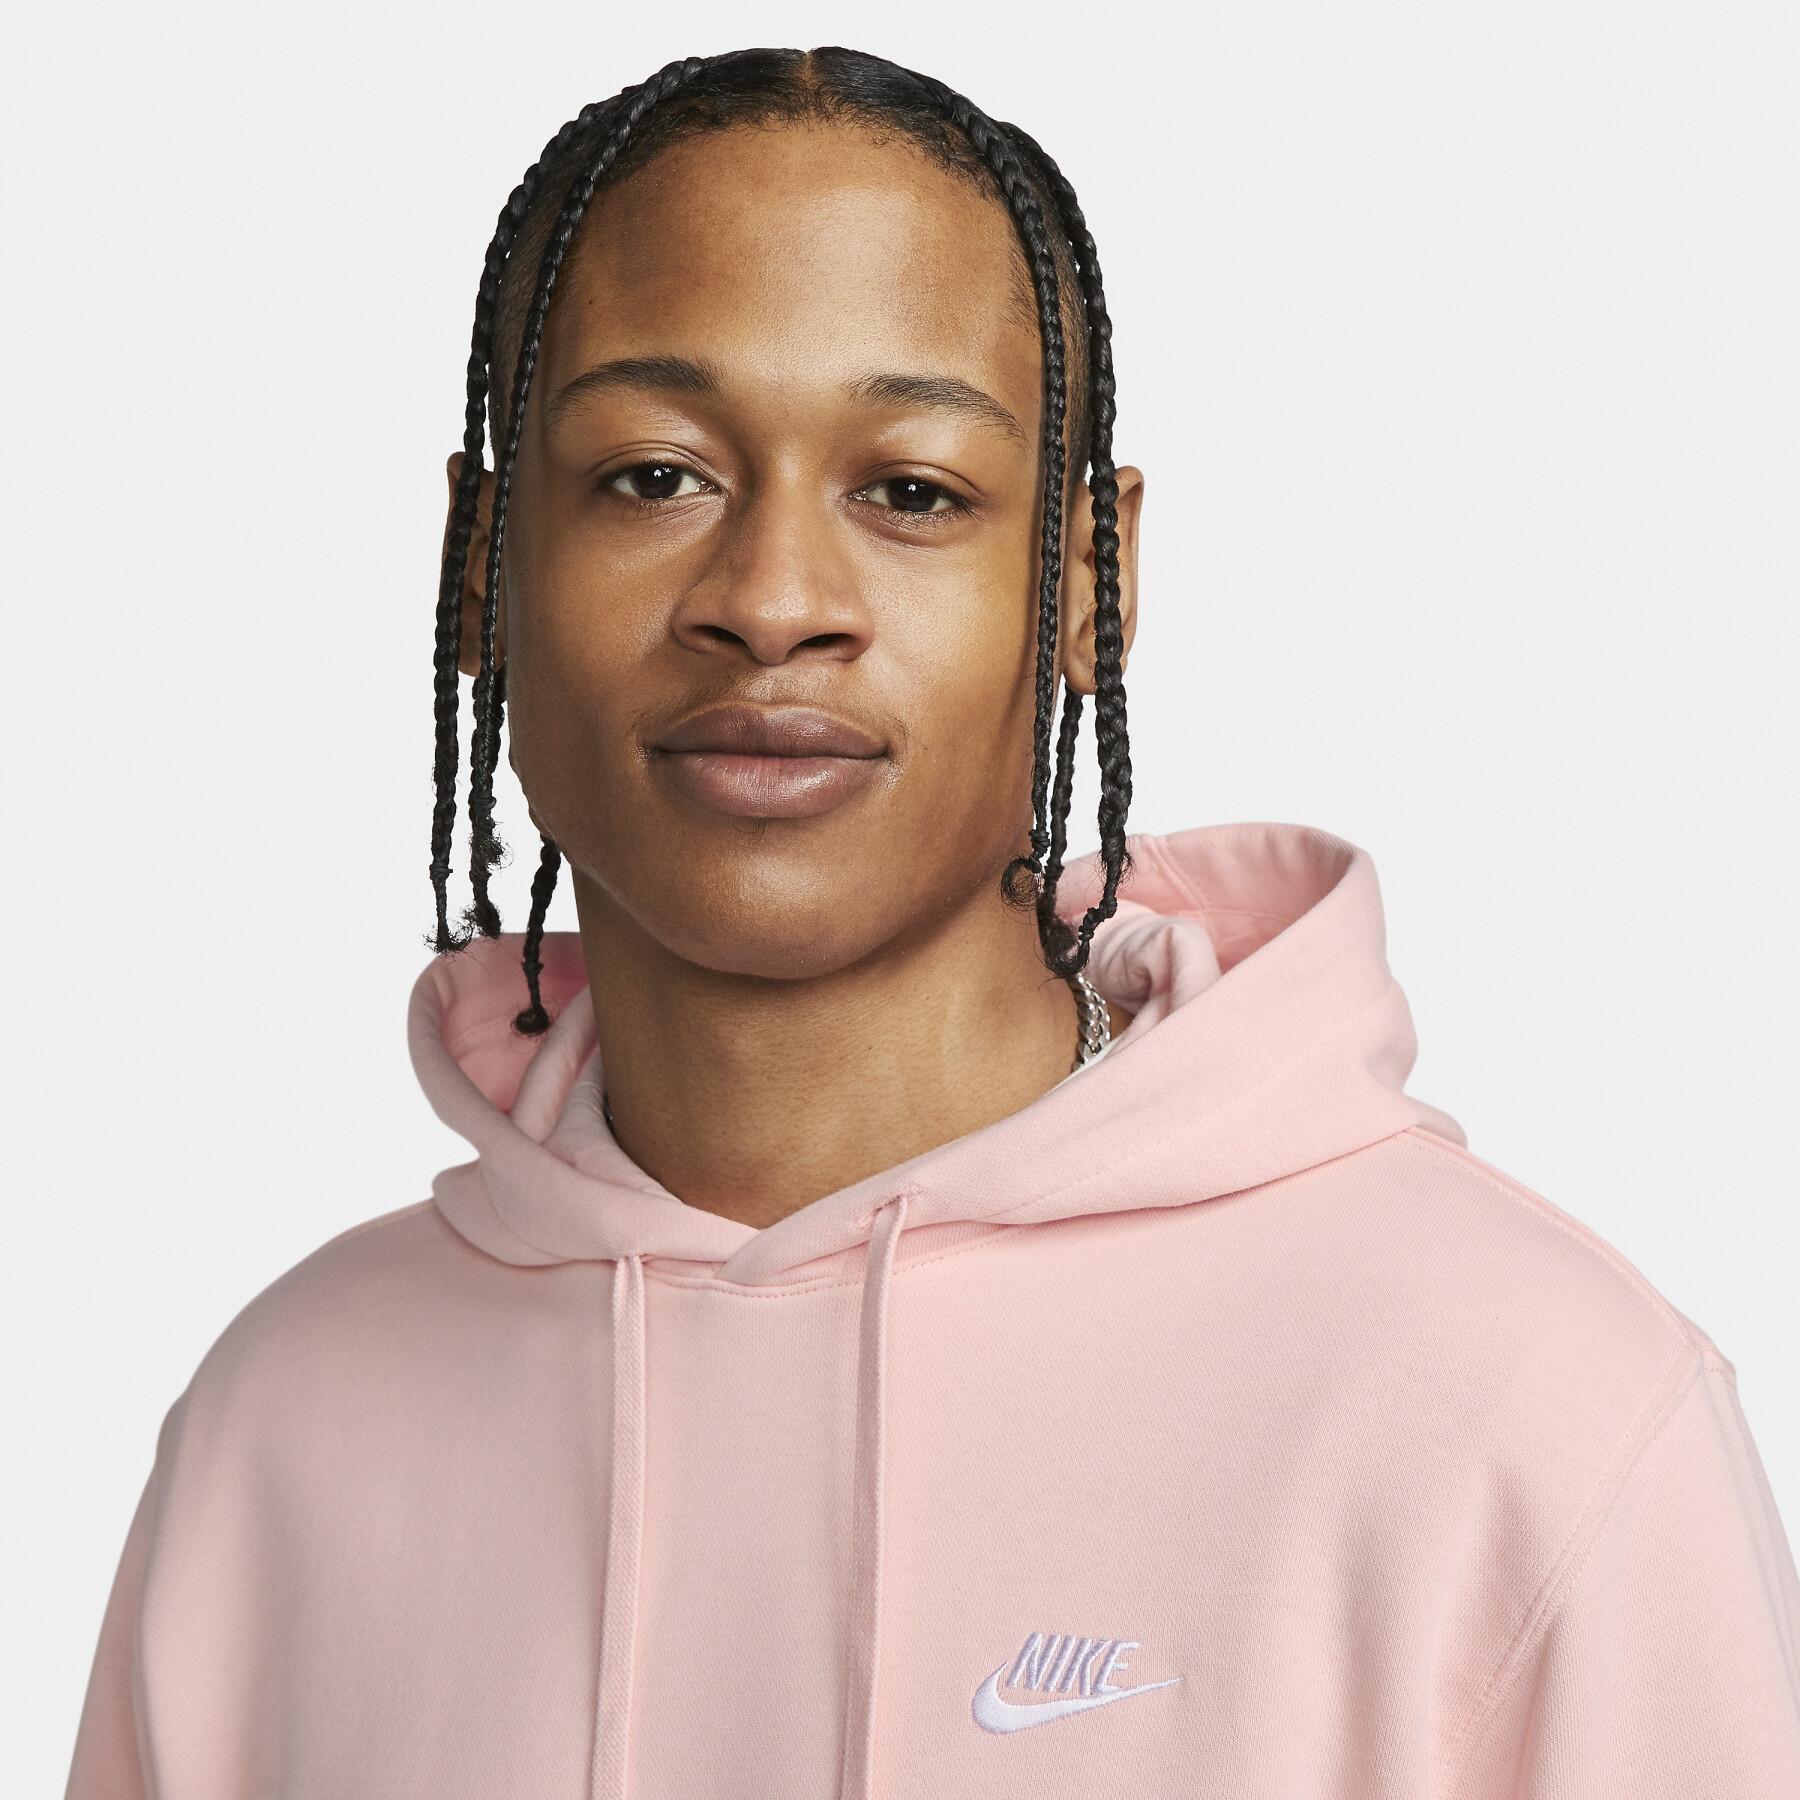 Sweatshirt hooded Nike Club - Nike - Brands - Lifestyle